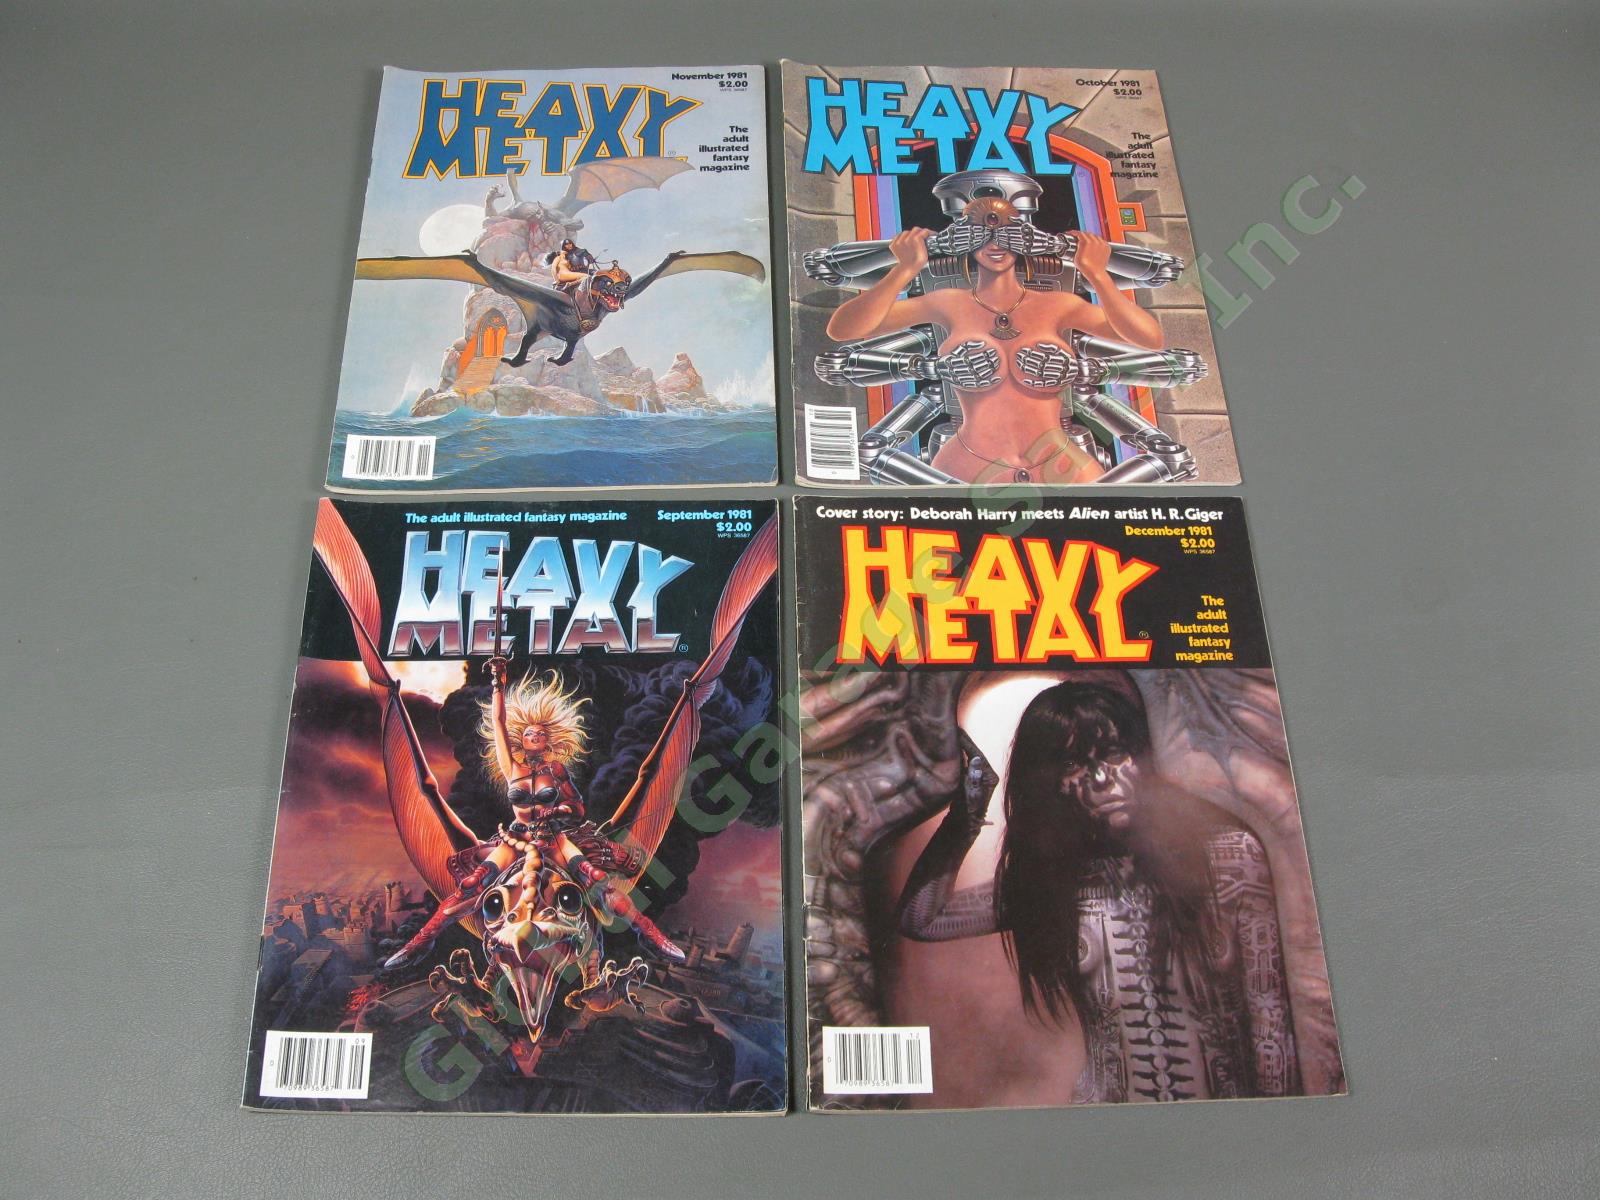 15 1981-82 Heavy Metal Adult Illustrated Fantasy Comic Magazine Issue Series Lot 1